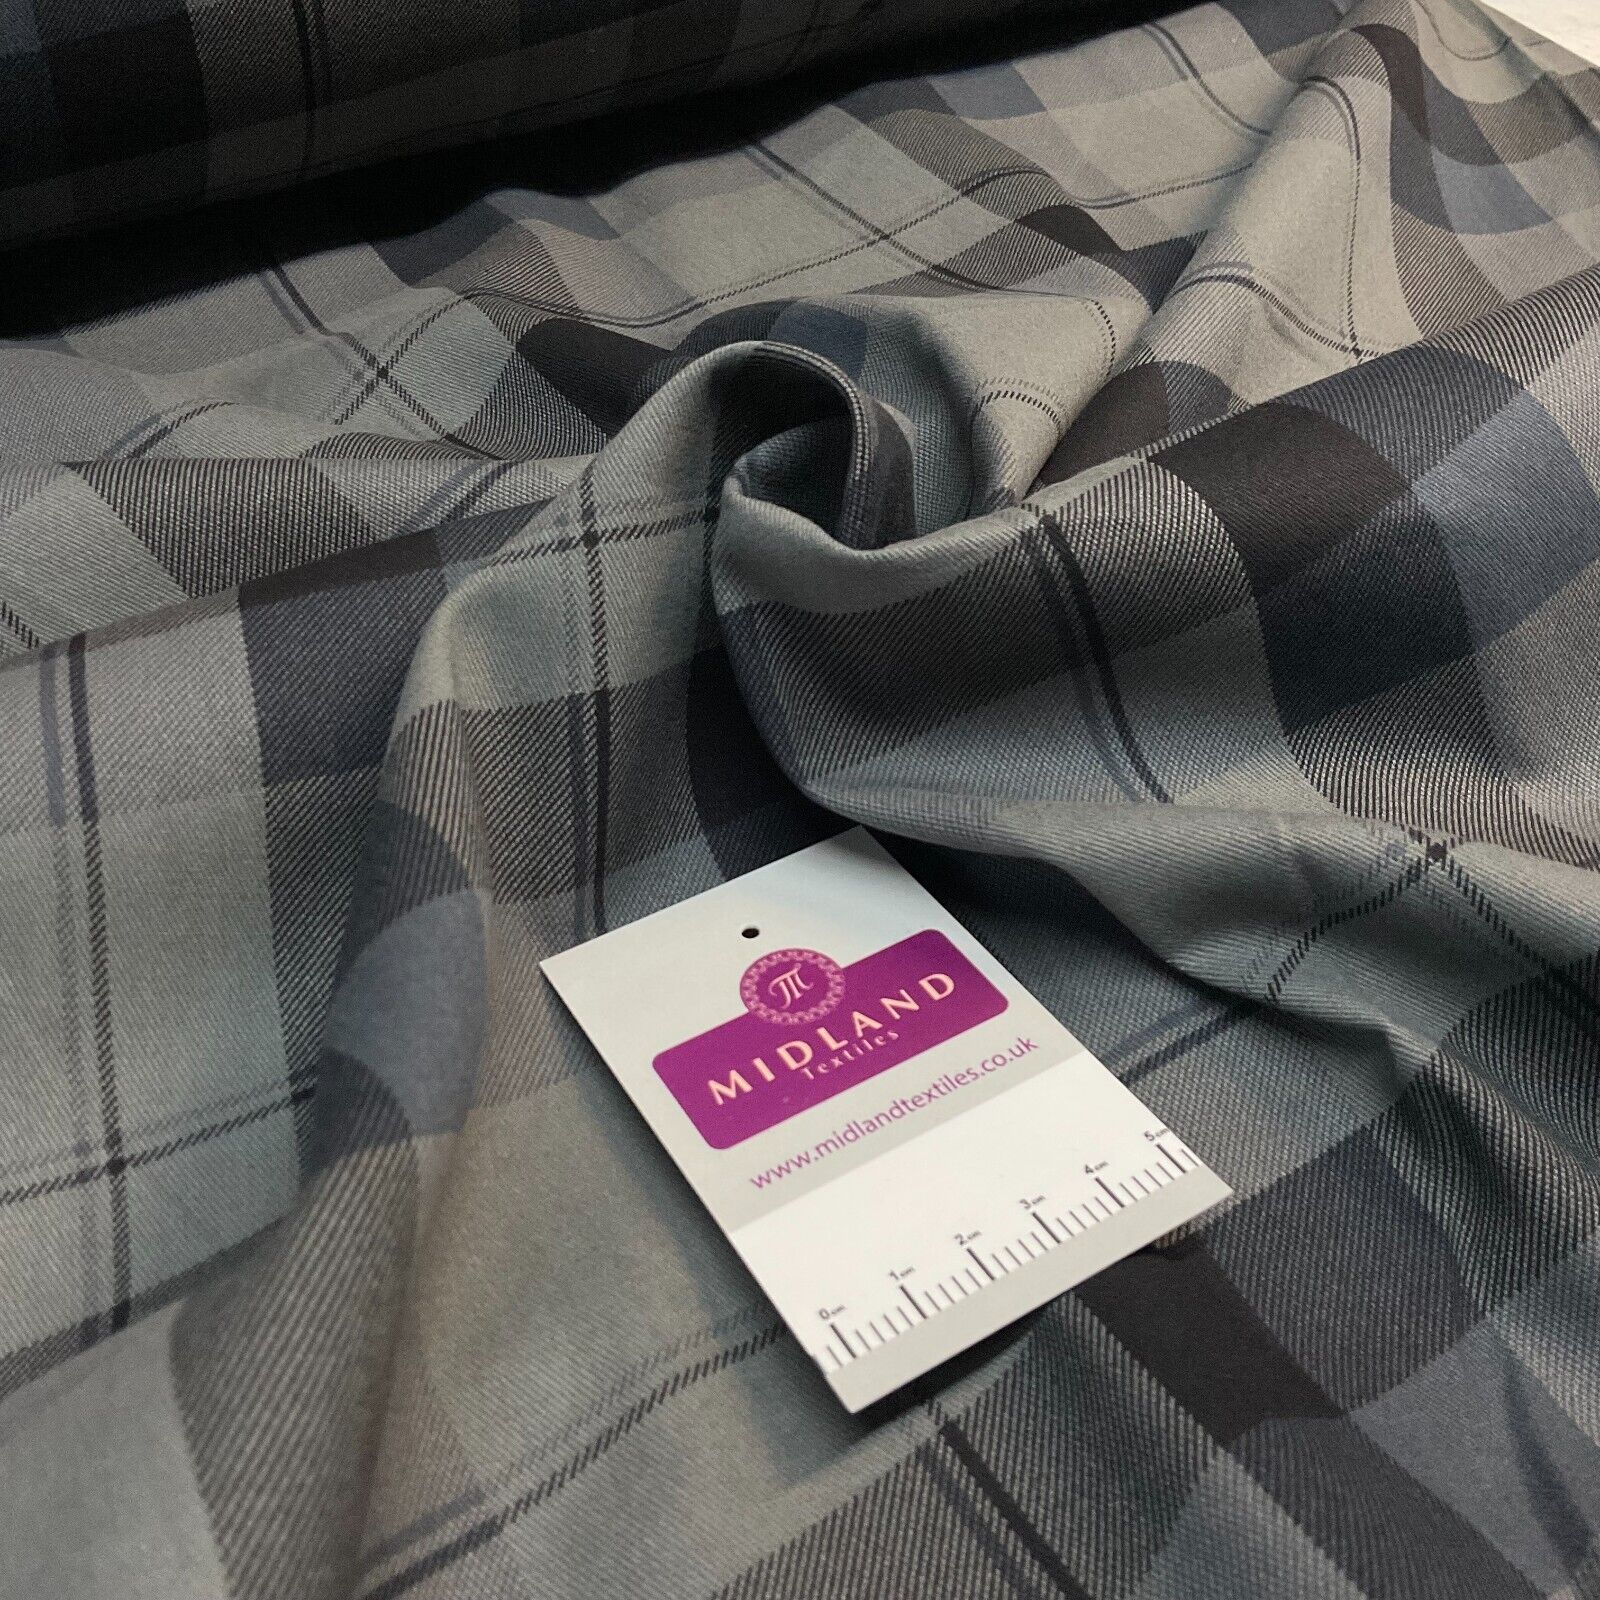 Plaid Scottish tartan Check Cotton Drill upholstery workwear Fabric 150 cm M1718